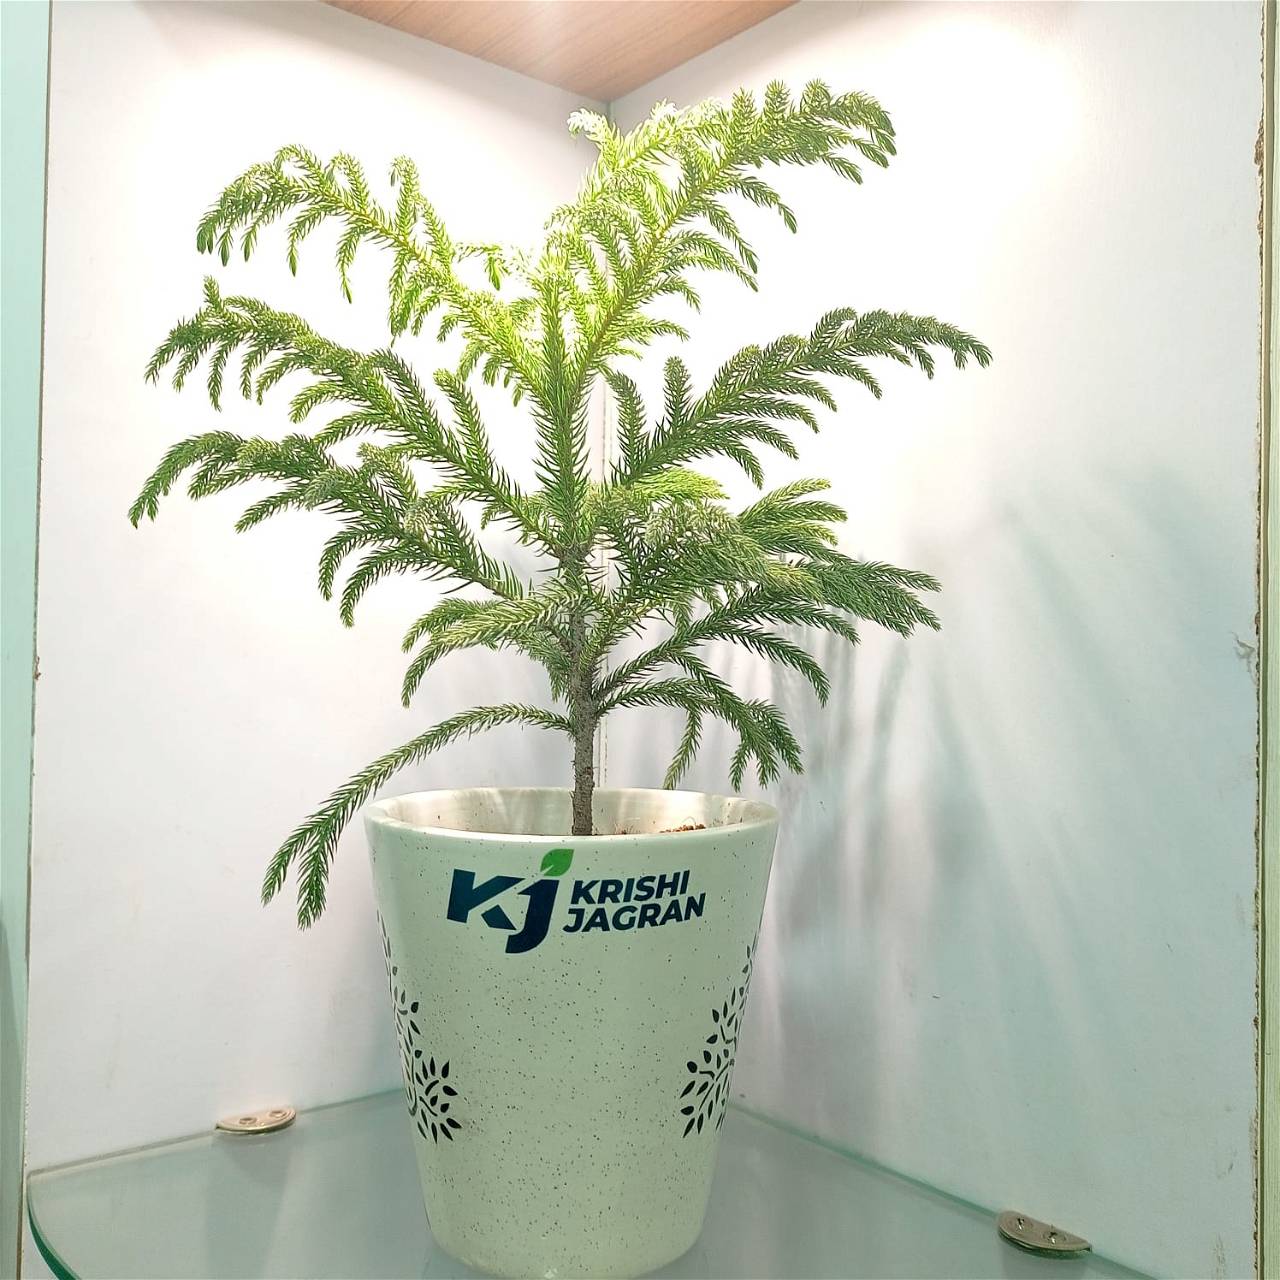 Araucaria plant